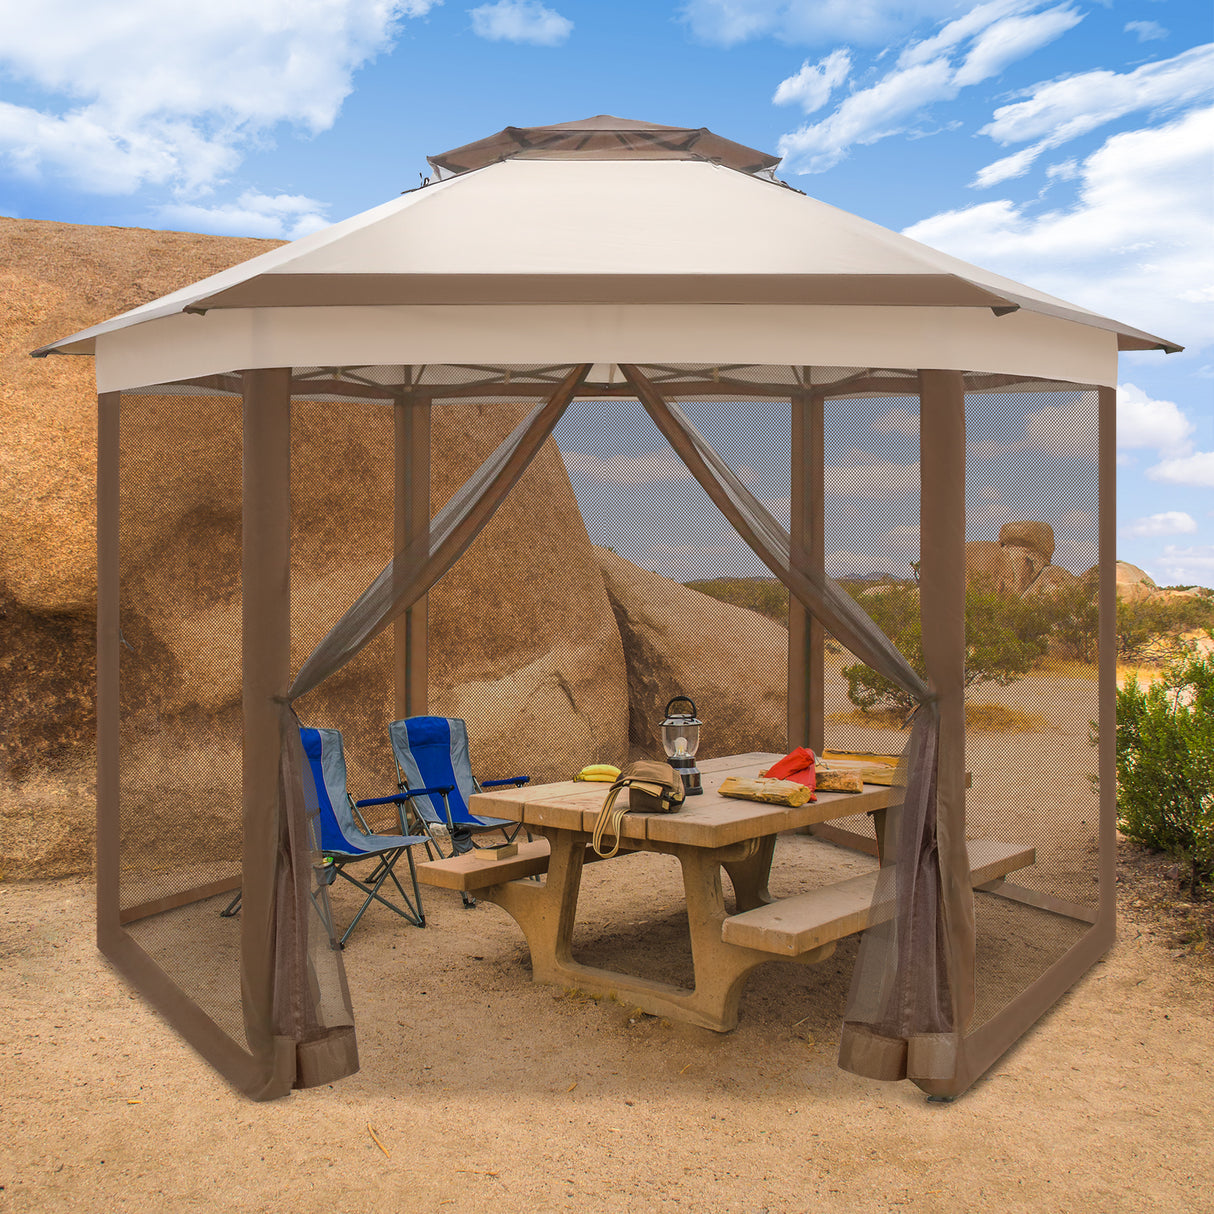 EAGLE PEAK 6-Sided Pop Up Gazebo w/Mosquito Netting, 13x13 Double-Tier Hexagonal Outdoor Canopy Tent for Patio, Garden, Party, Backyard, Beige